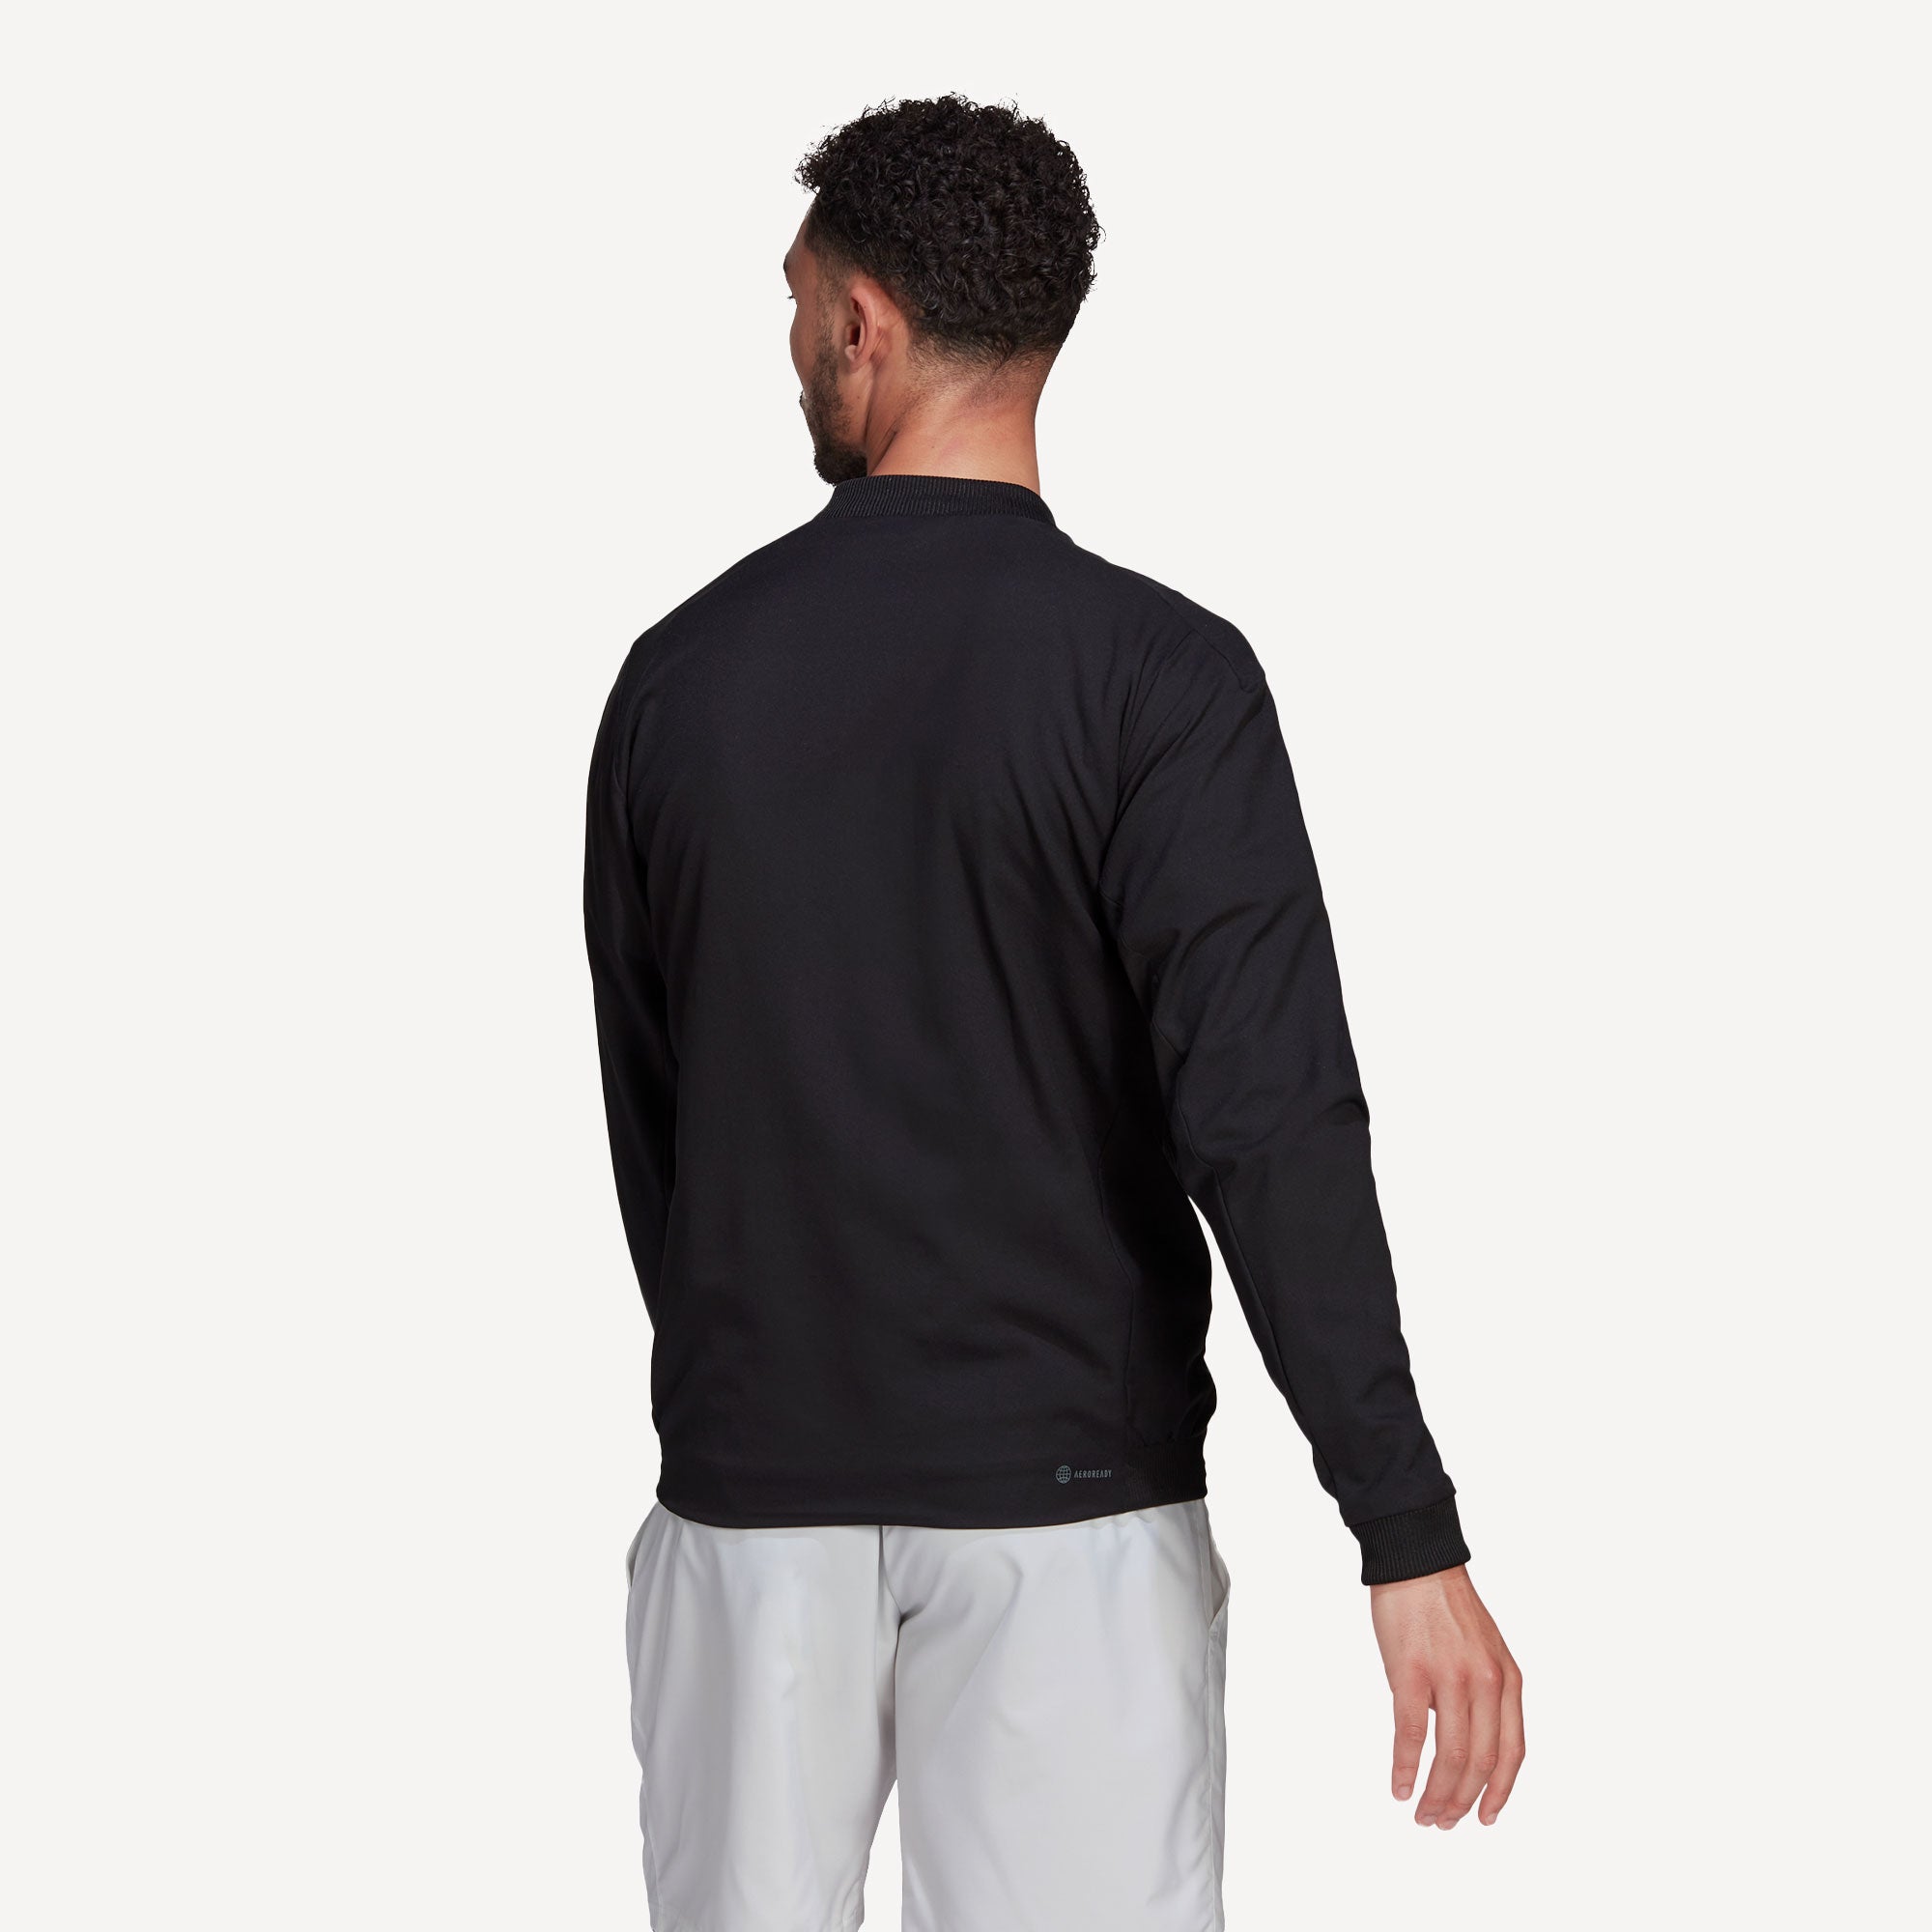 adidas Melbourne Men's Stretch Woven Tennis Jacket Black (2)